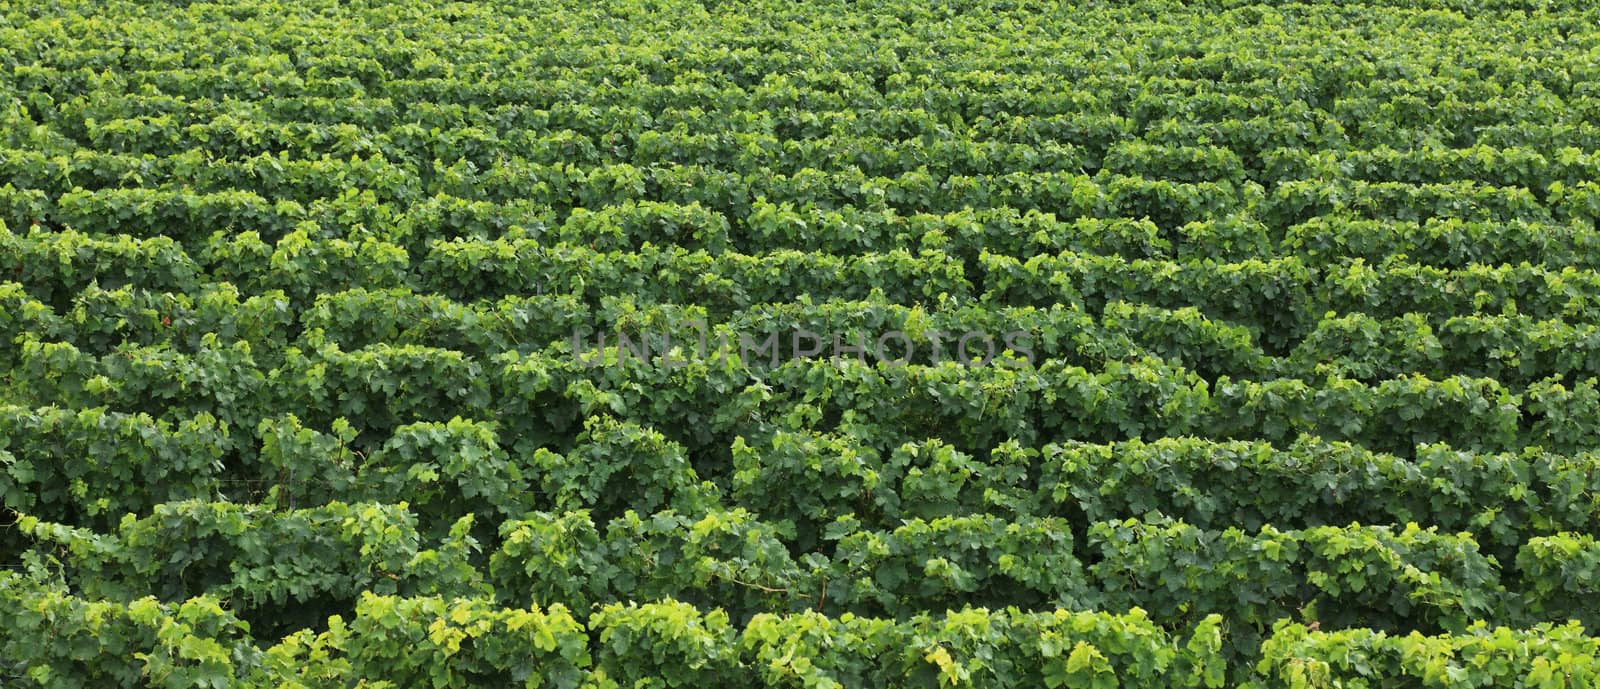 Upper image of a vineyard creating an interesting green natural texture.